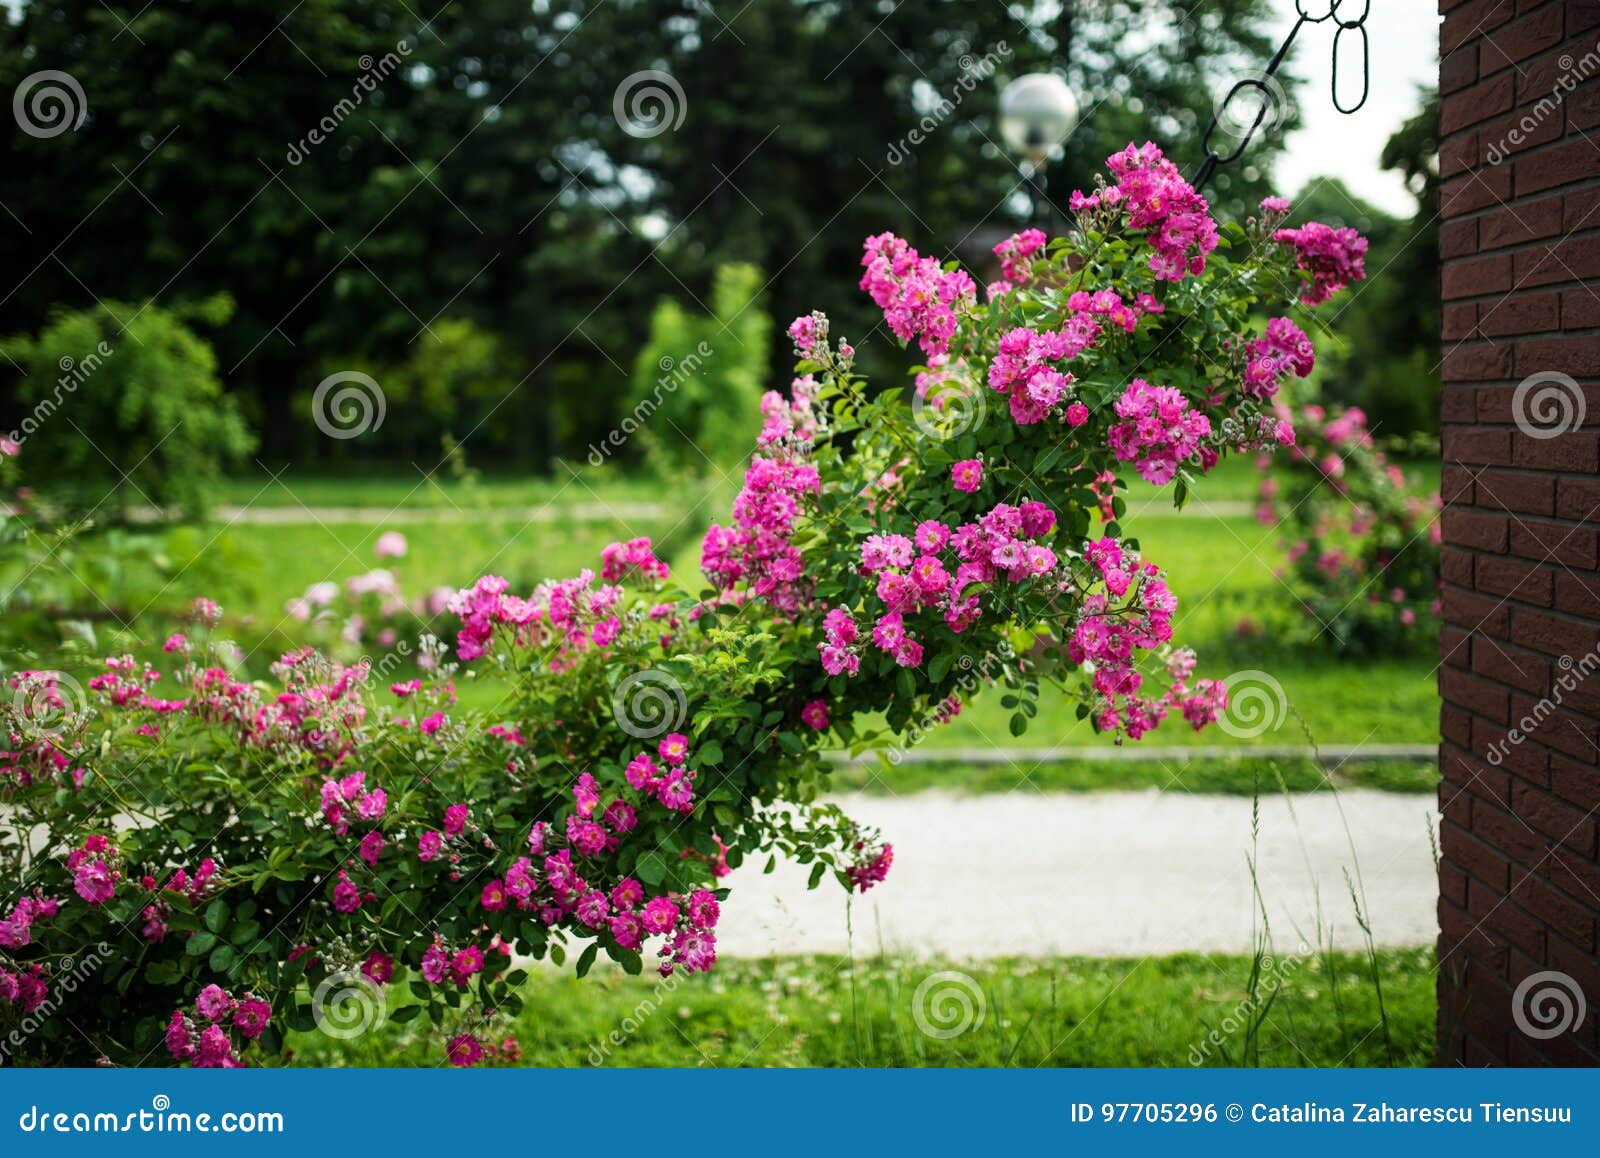 beautiful, abundant climbing rose in a park